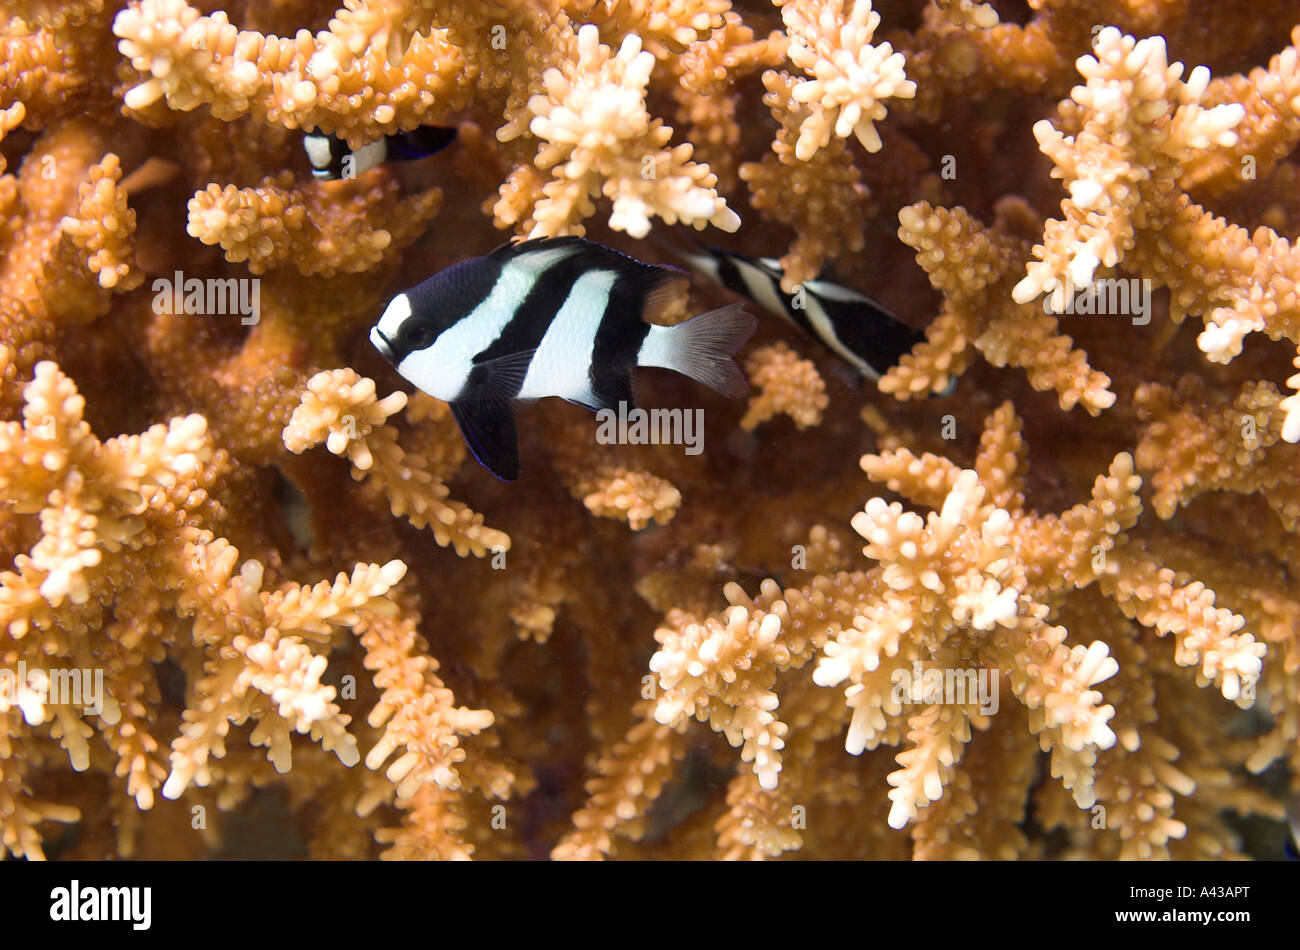 Humbug Damselfish hide in the coral reef. Stock Photo